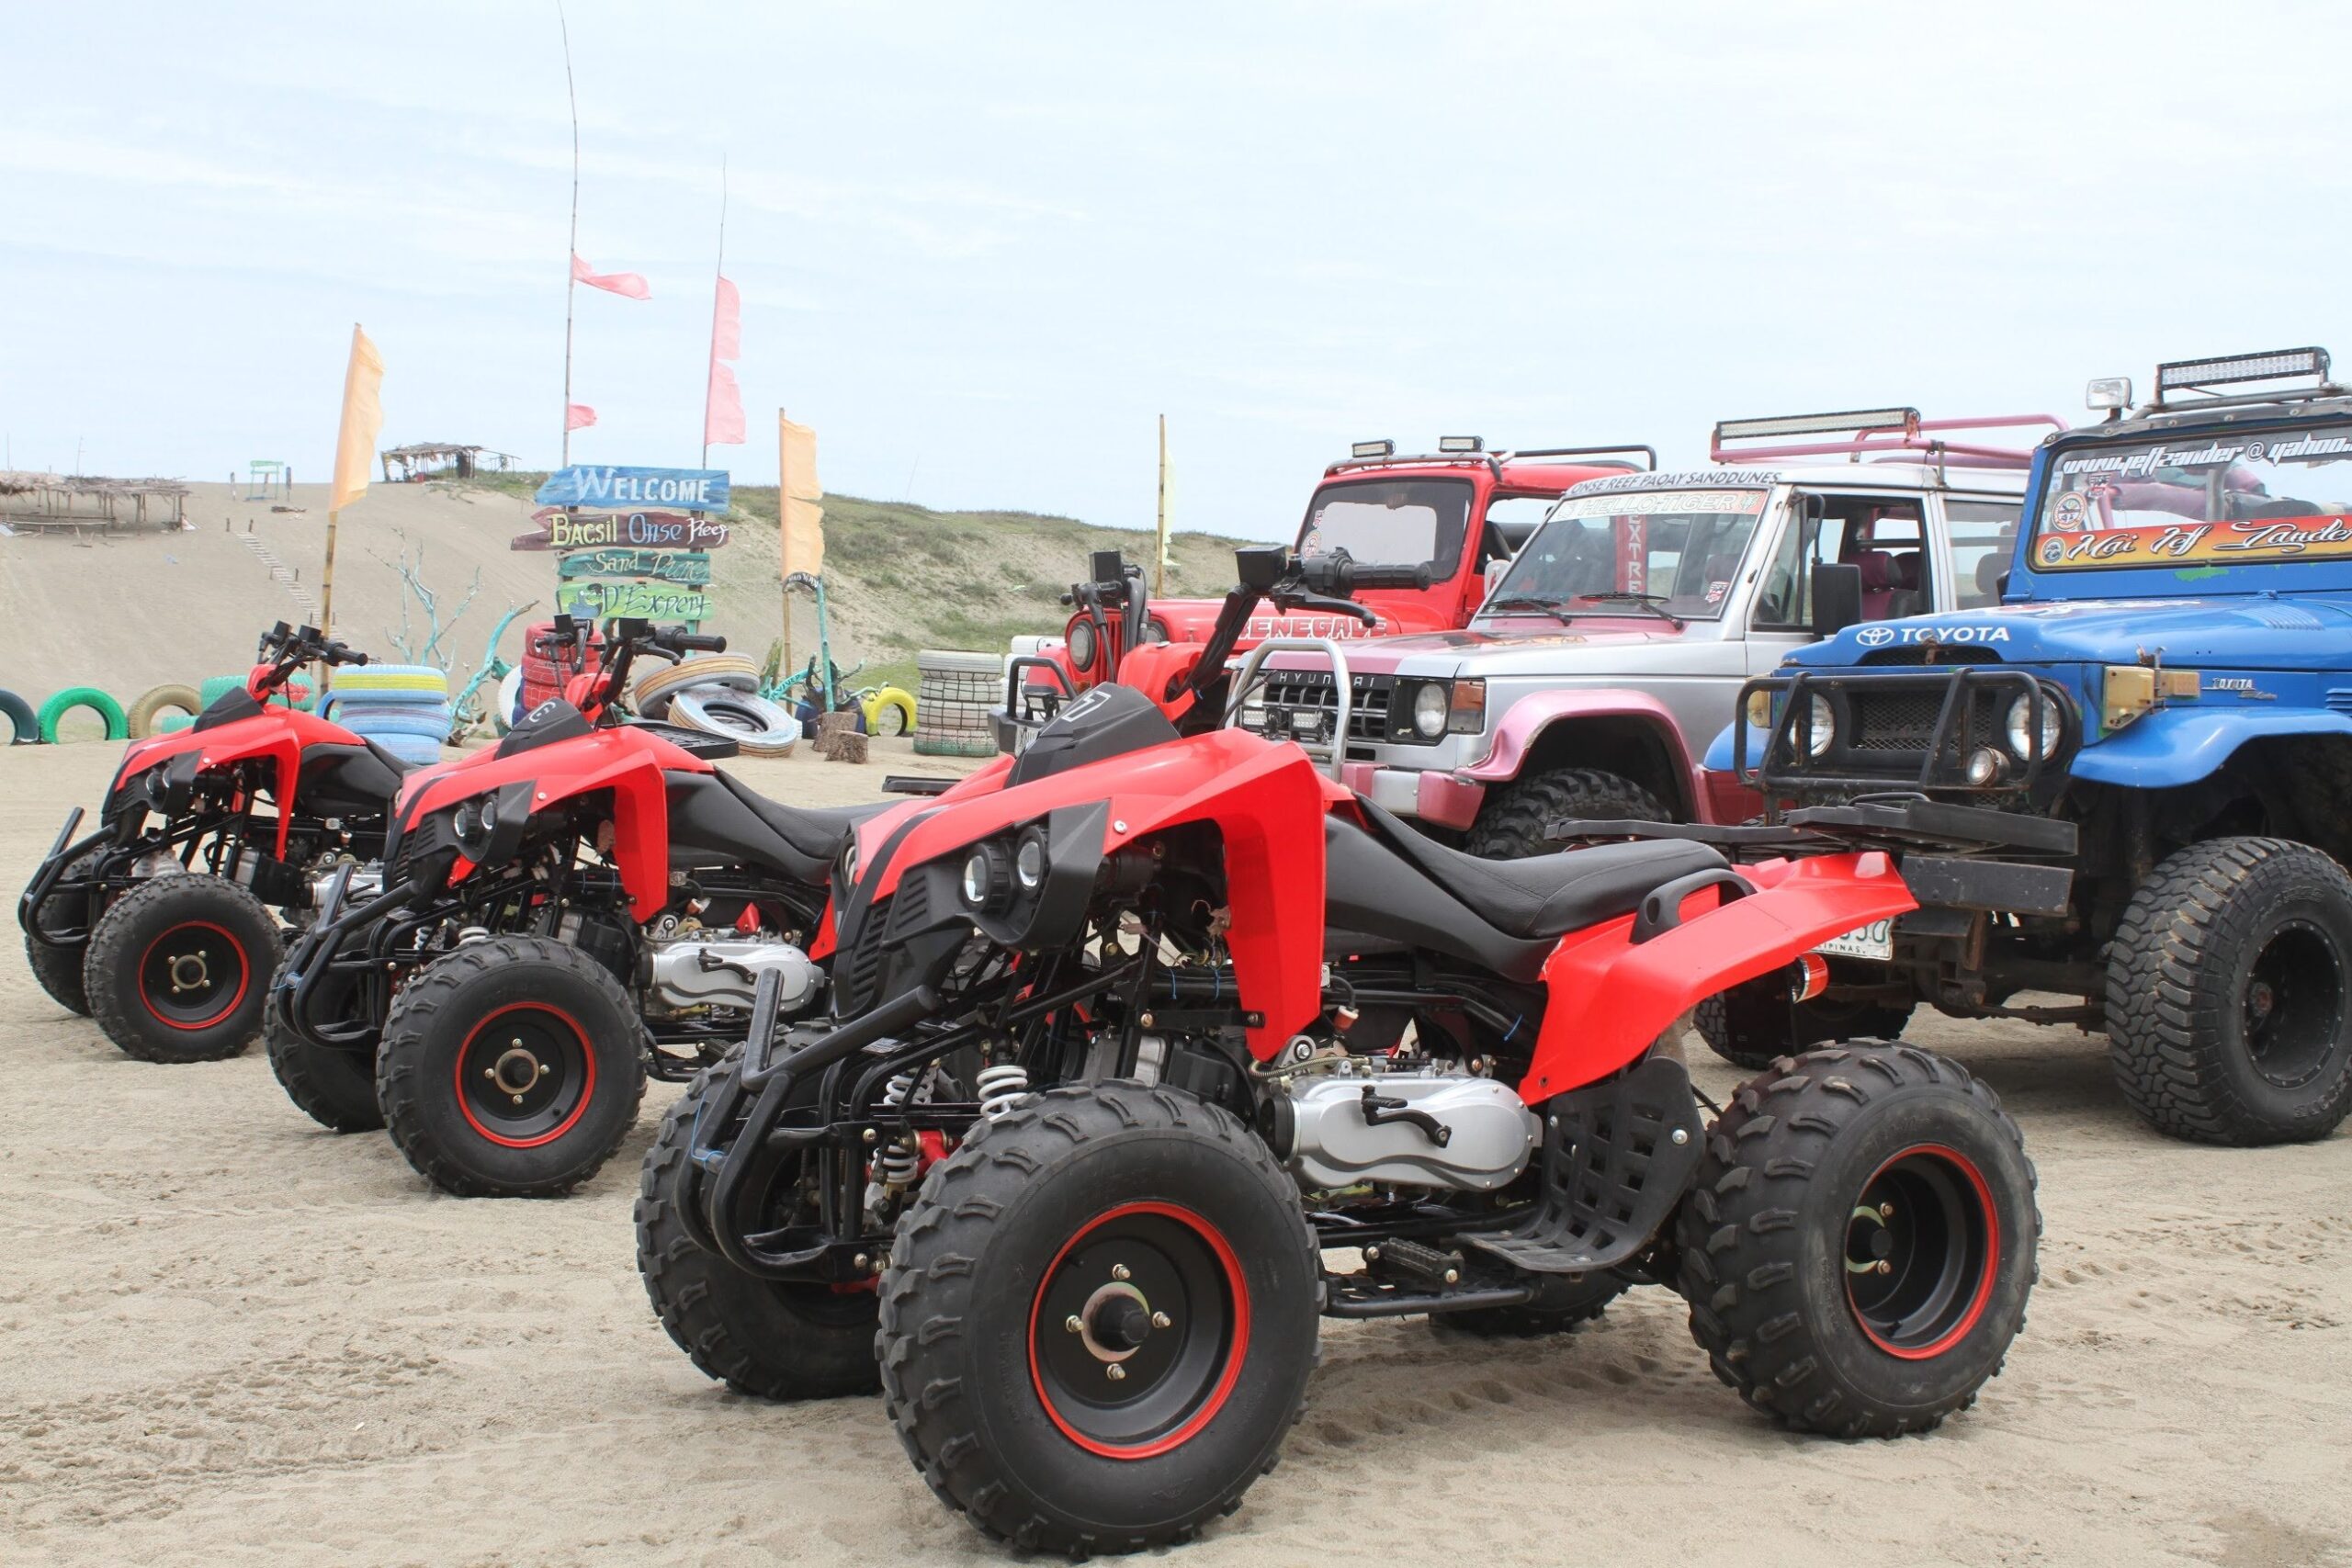 paoay sand dunes - ATV rides